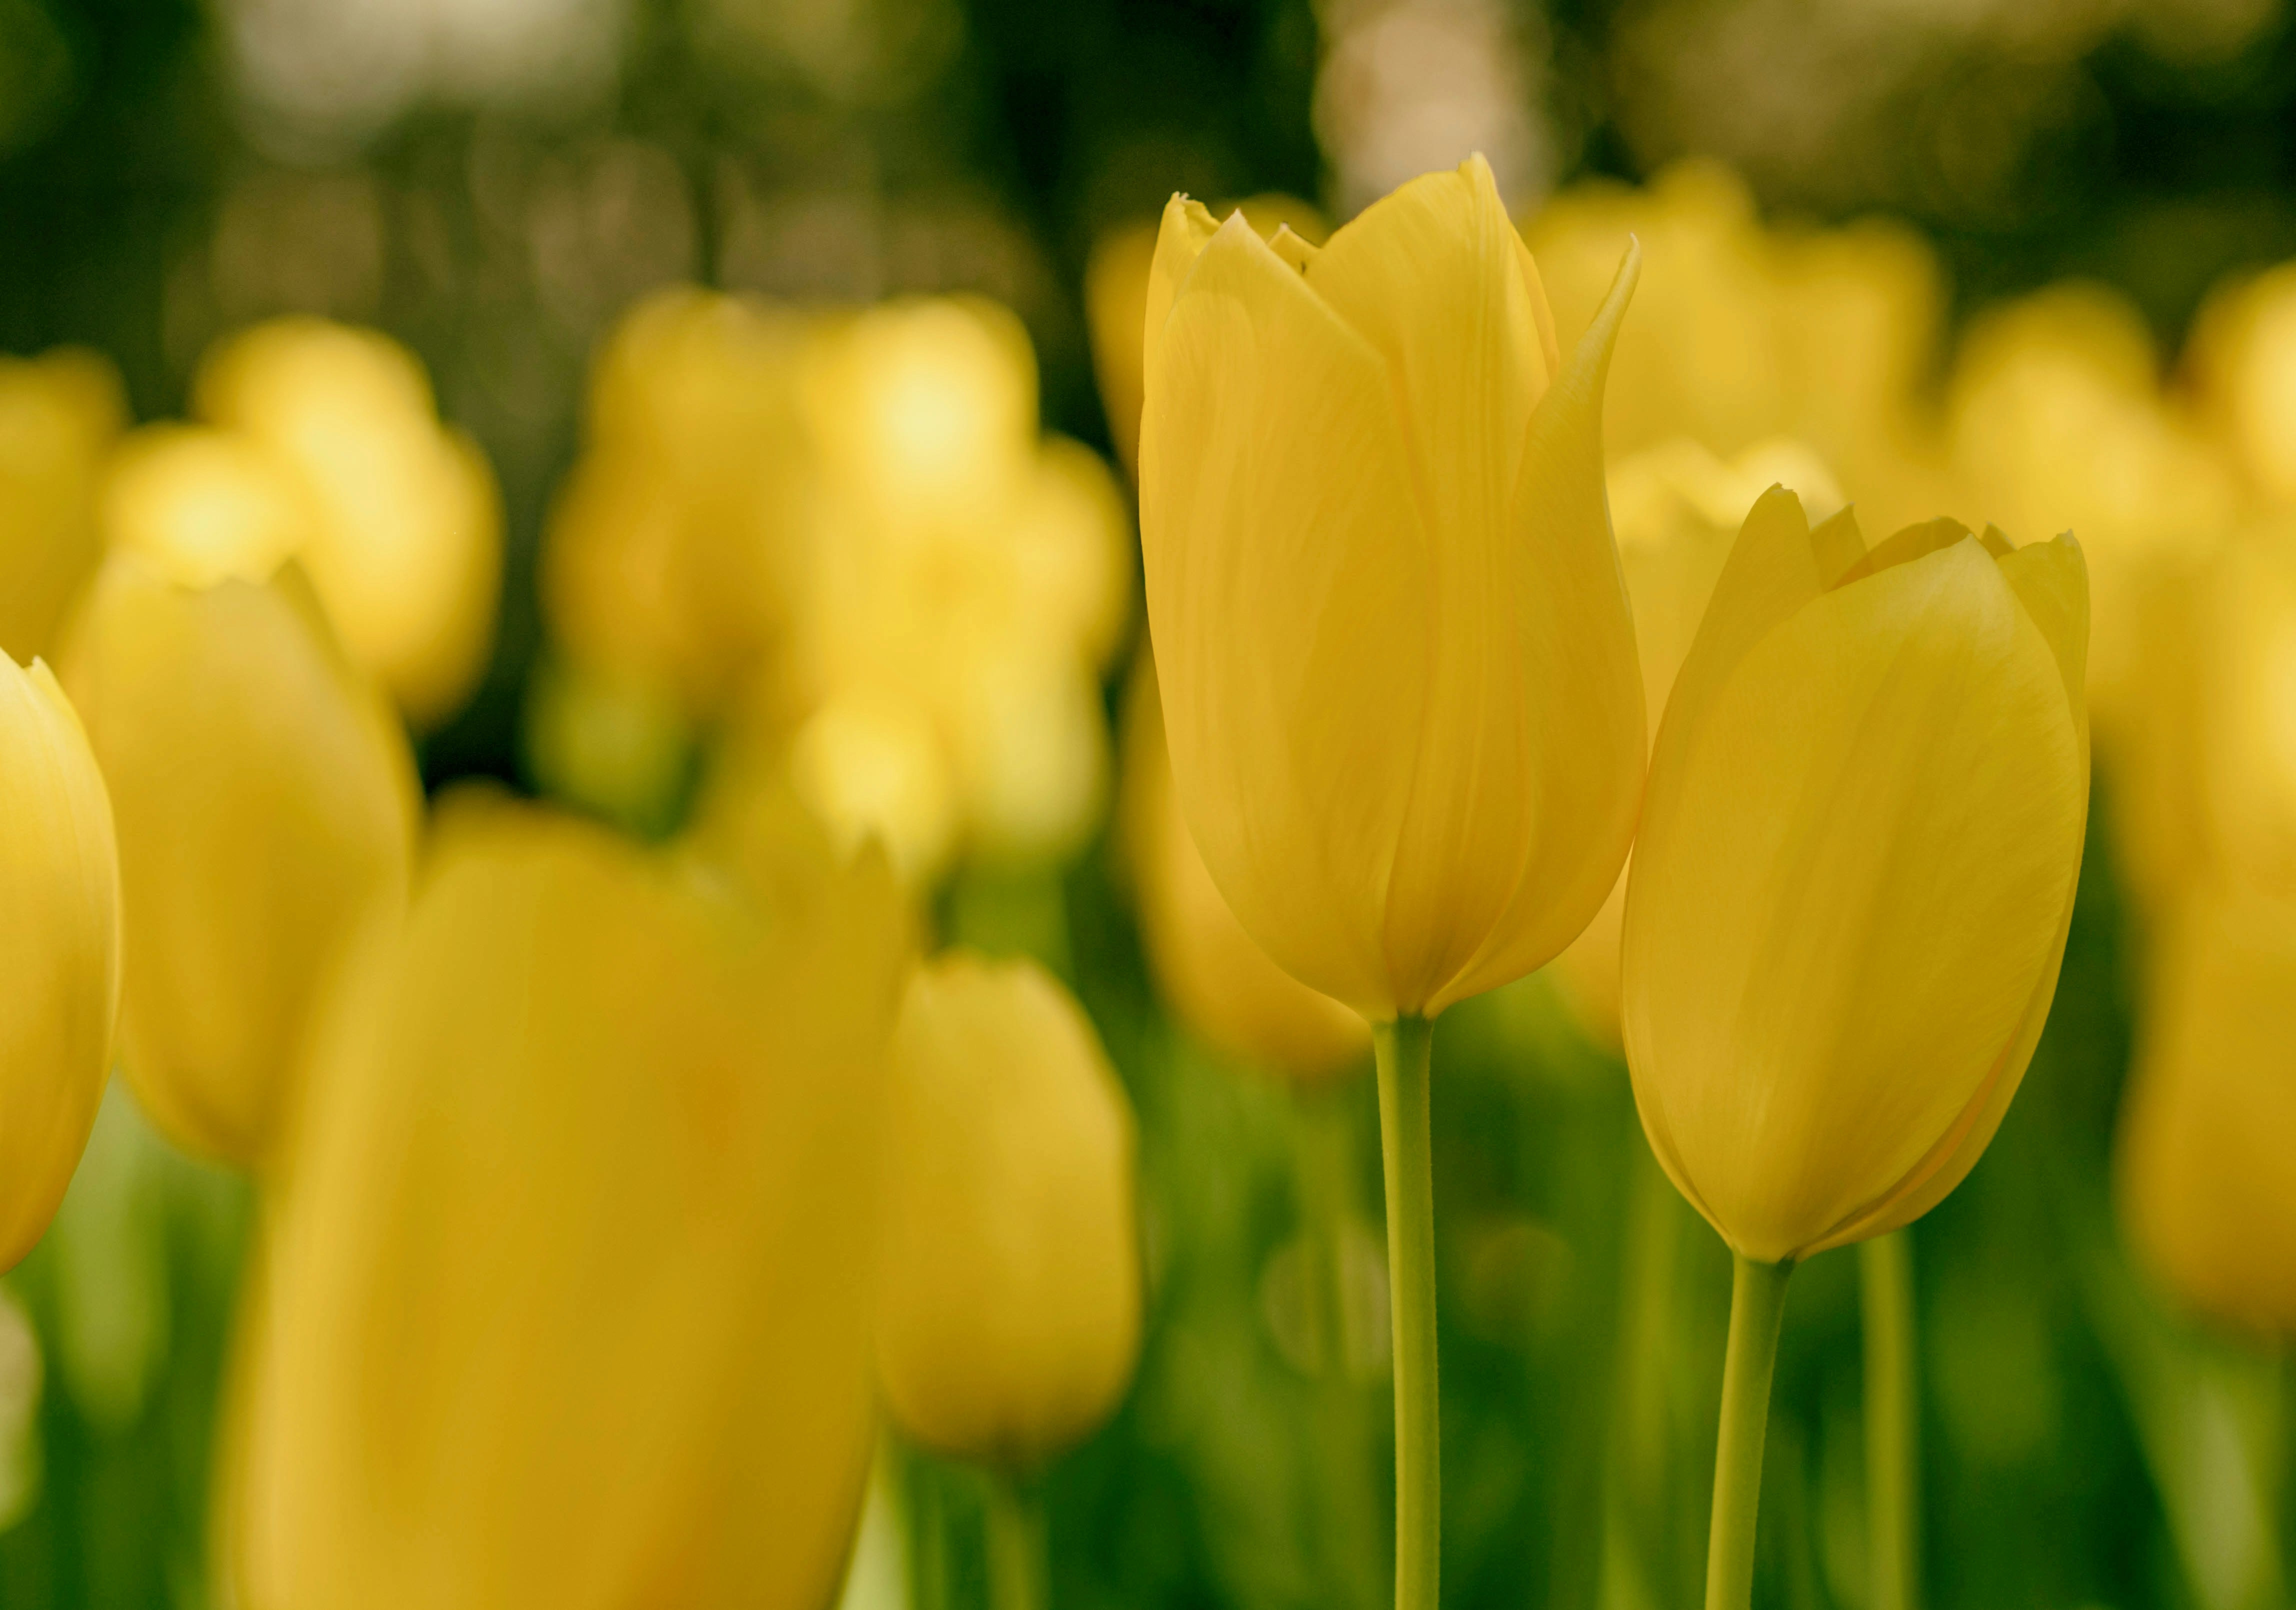 tilt shift lens photography of yellow tulips